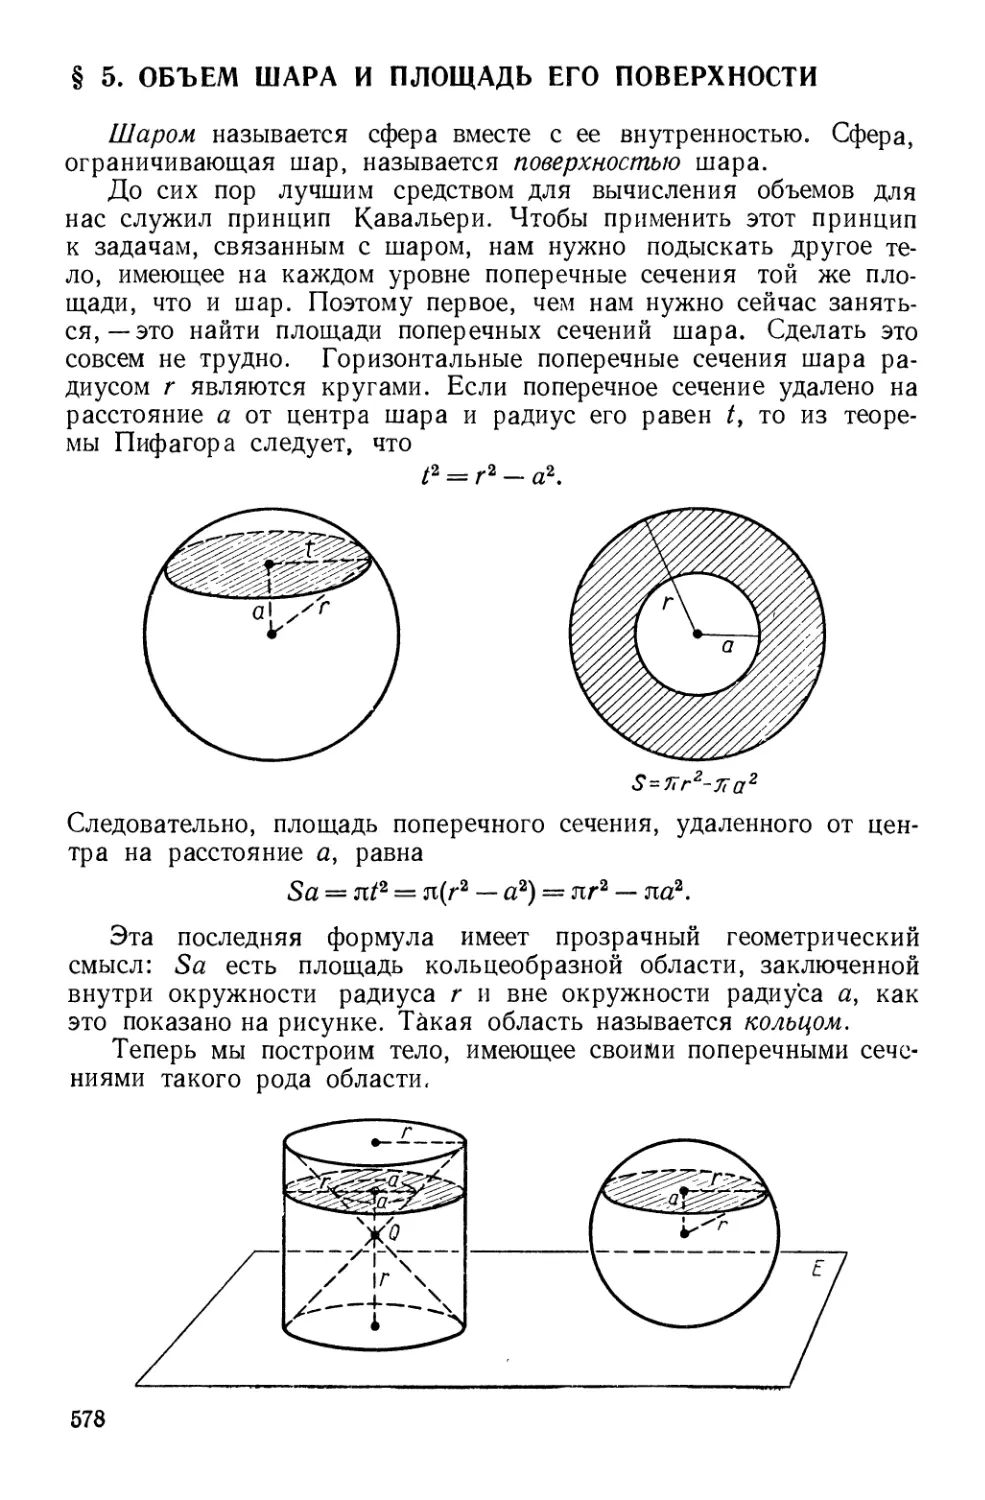 § 5. Объем шара и площадь его поверхности